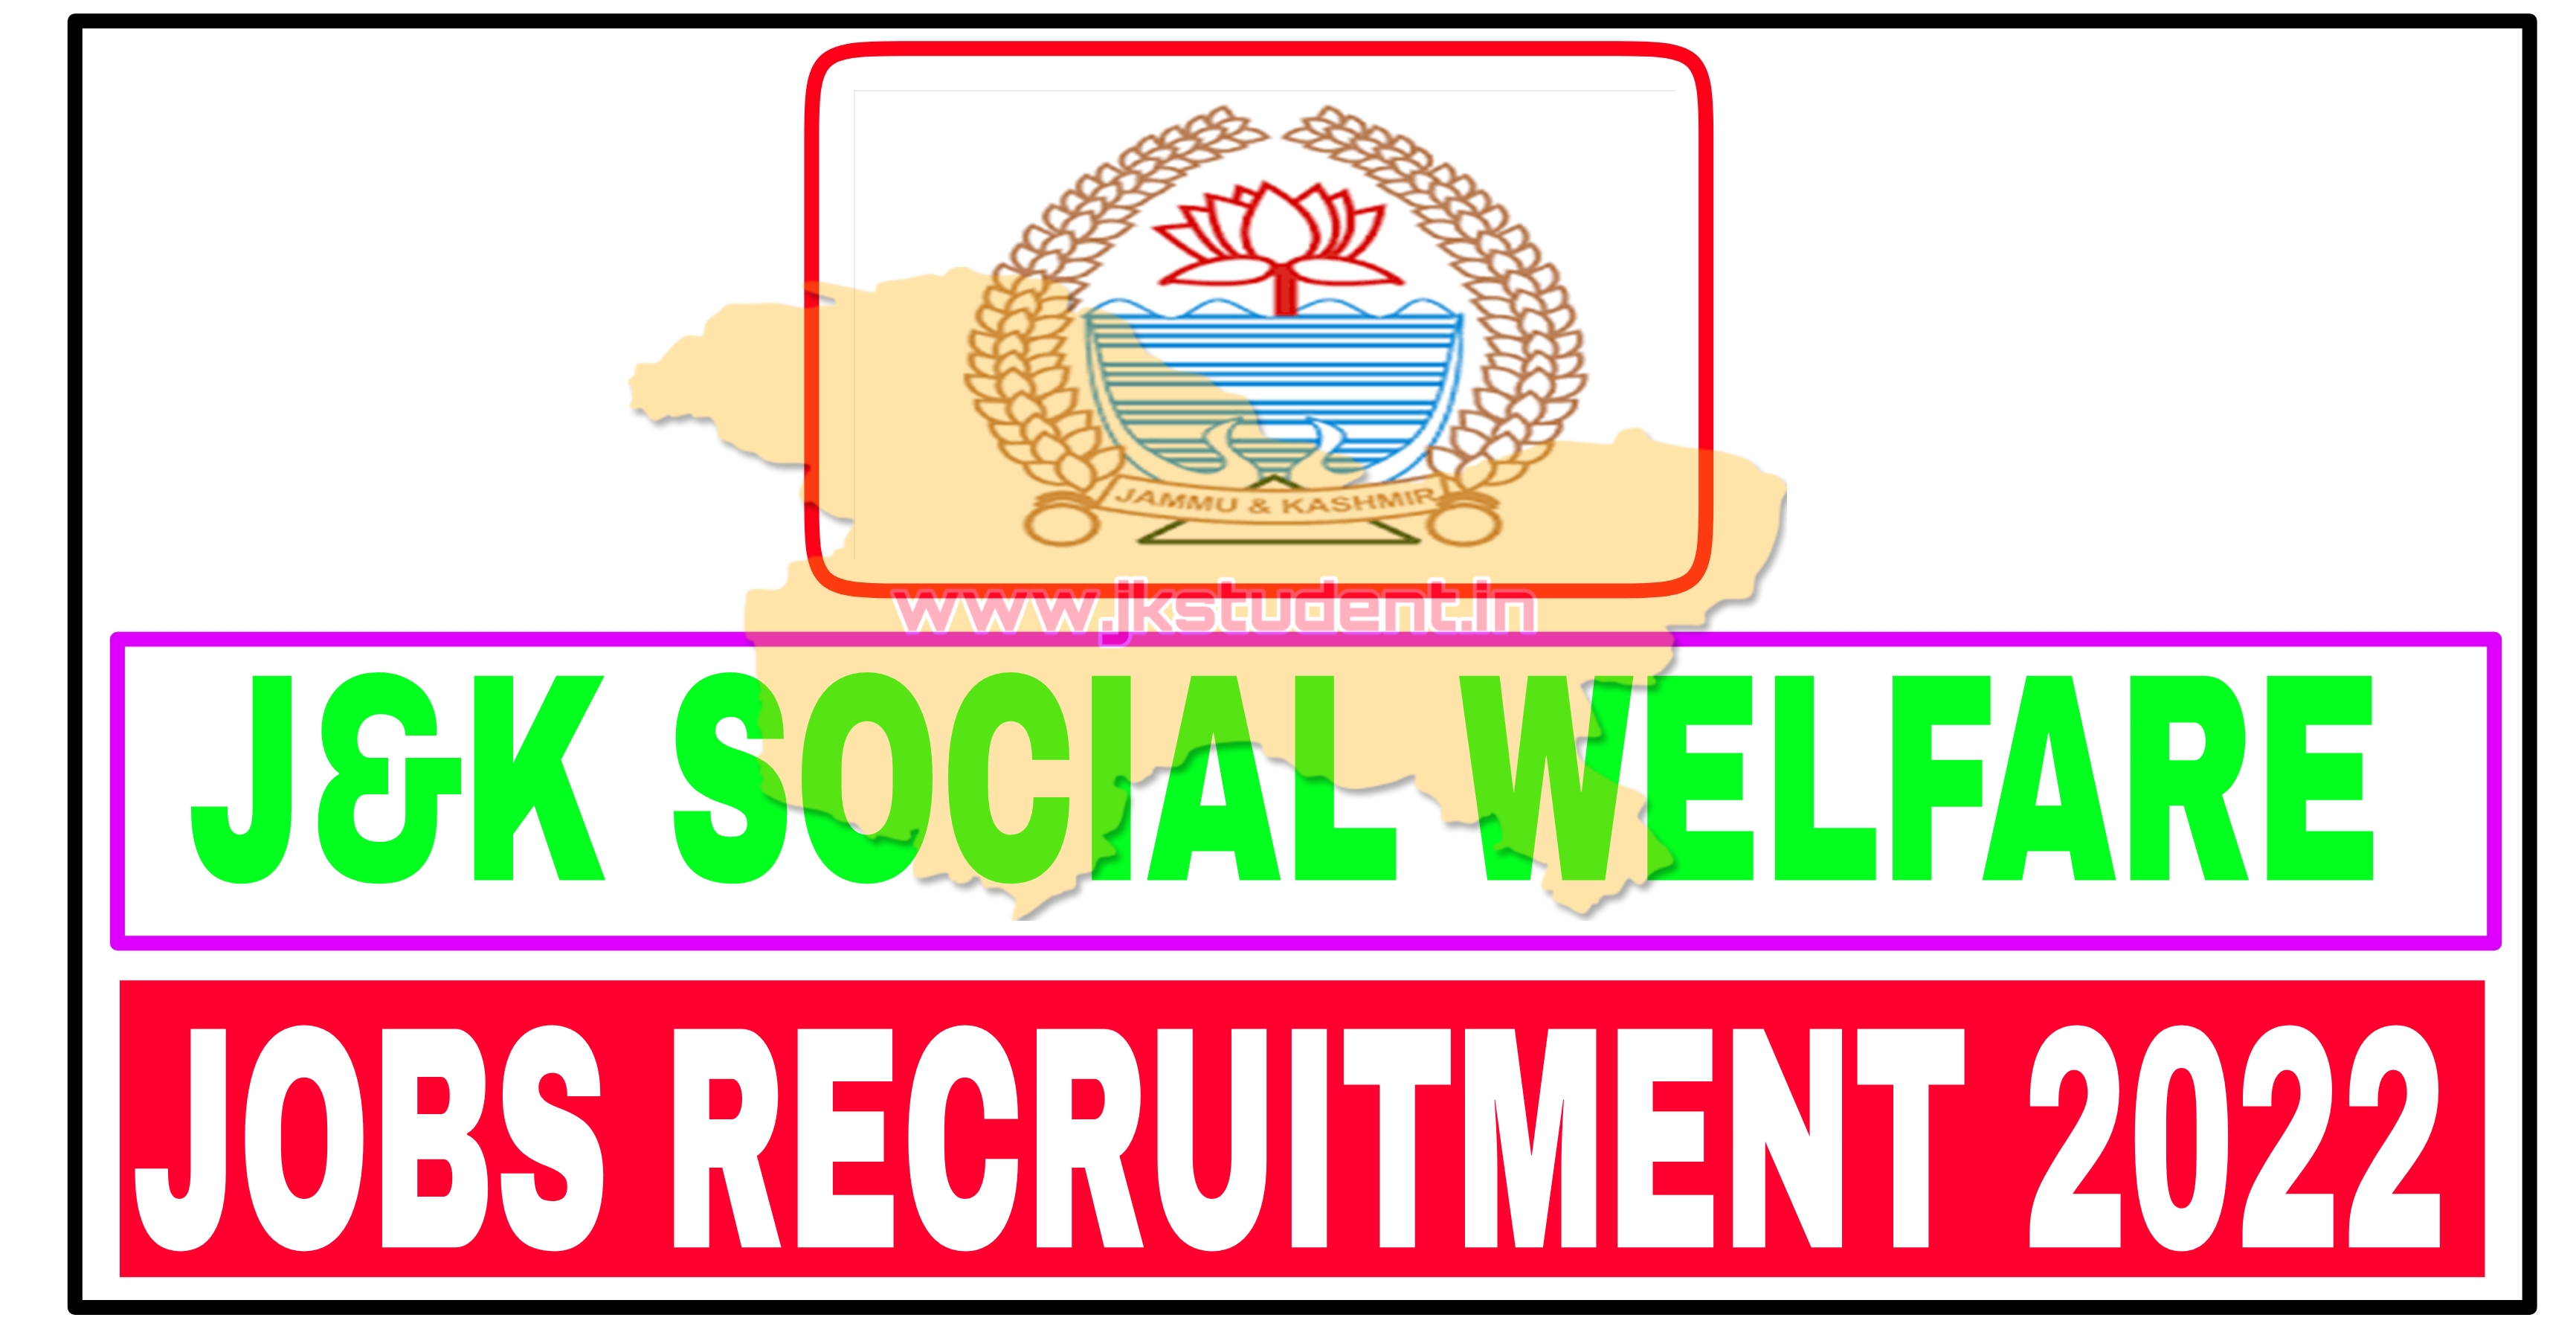 JOBS, Social welfare jobs recruitment, j&k social welfare jobs recruitment 2022, Job posts, govt jobs,state govt jobs,